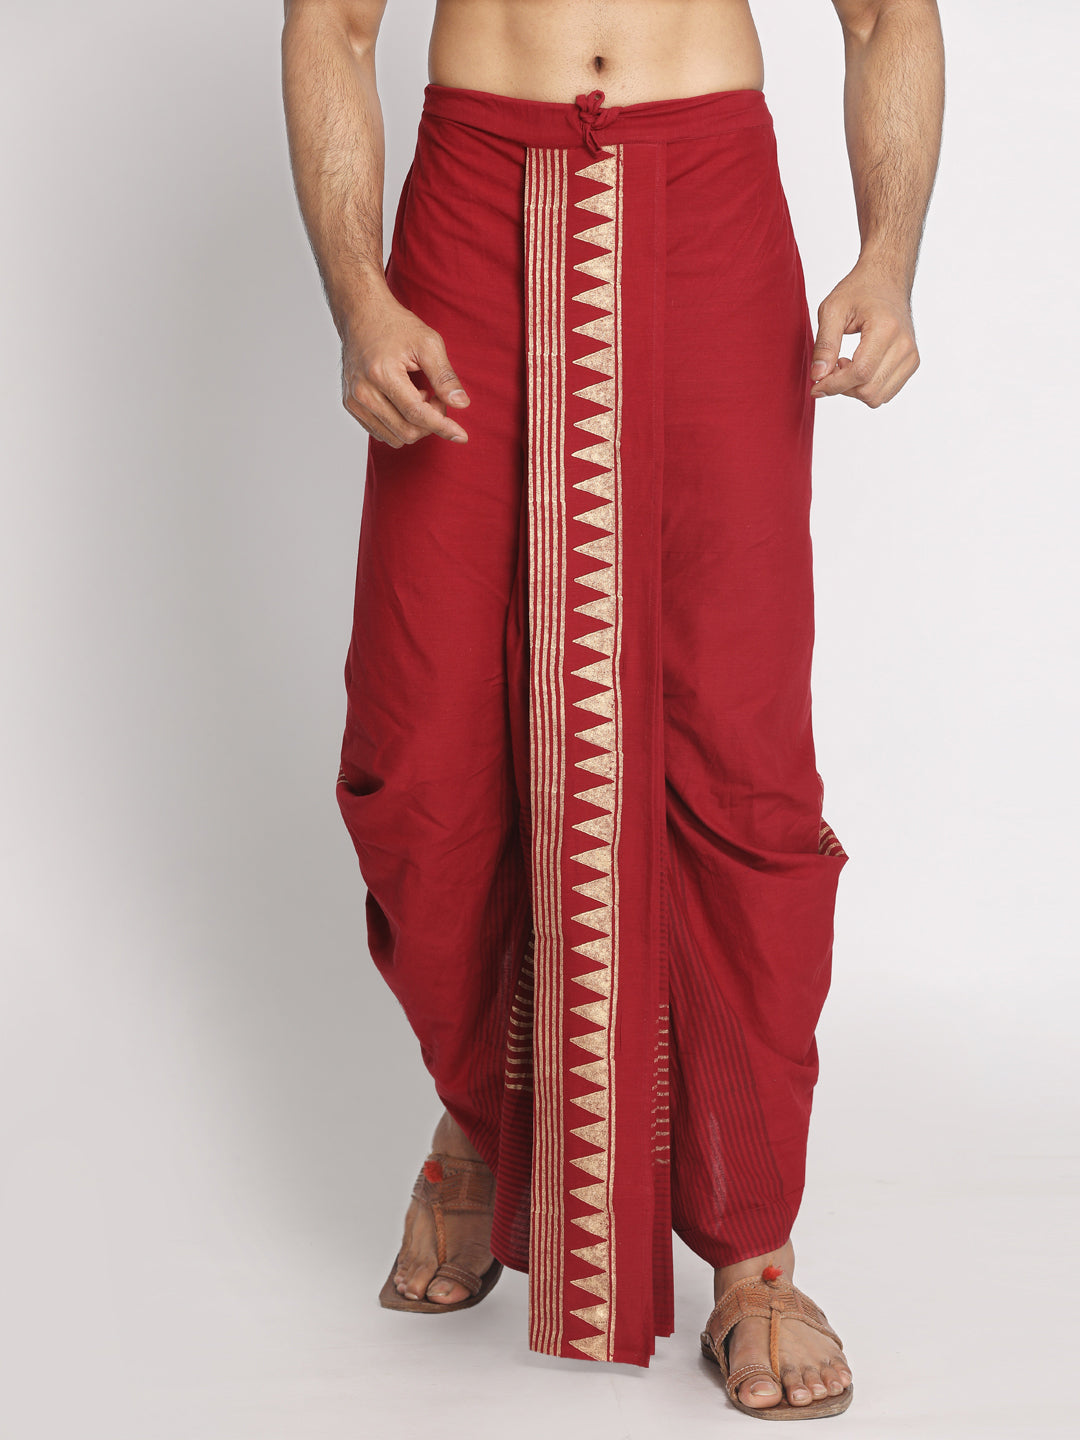 Cotton Rayon Maroon Color Dhoti Pants, Cotton Pants Ethnic Pants, Yoga Pants,  Dhoti Salwars - Etsy